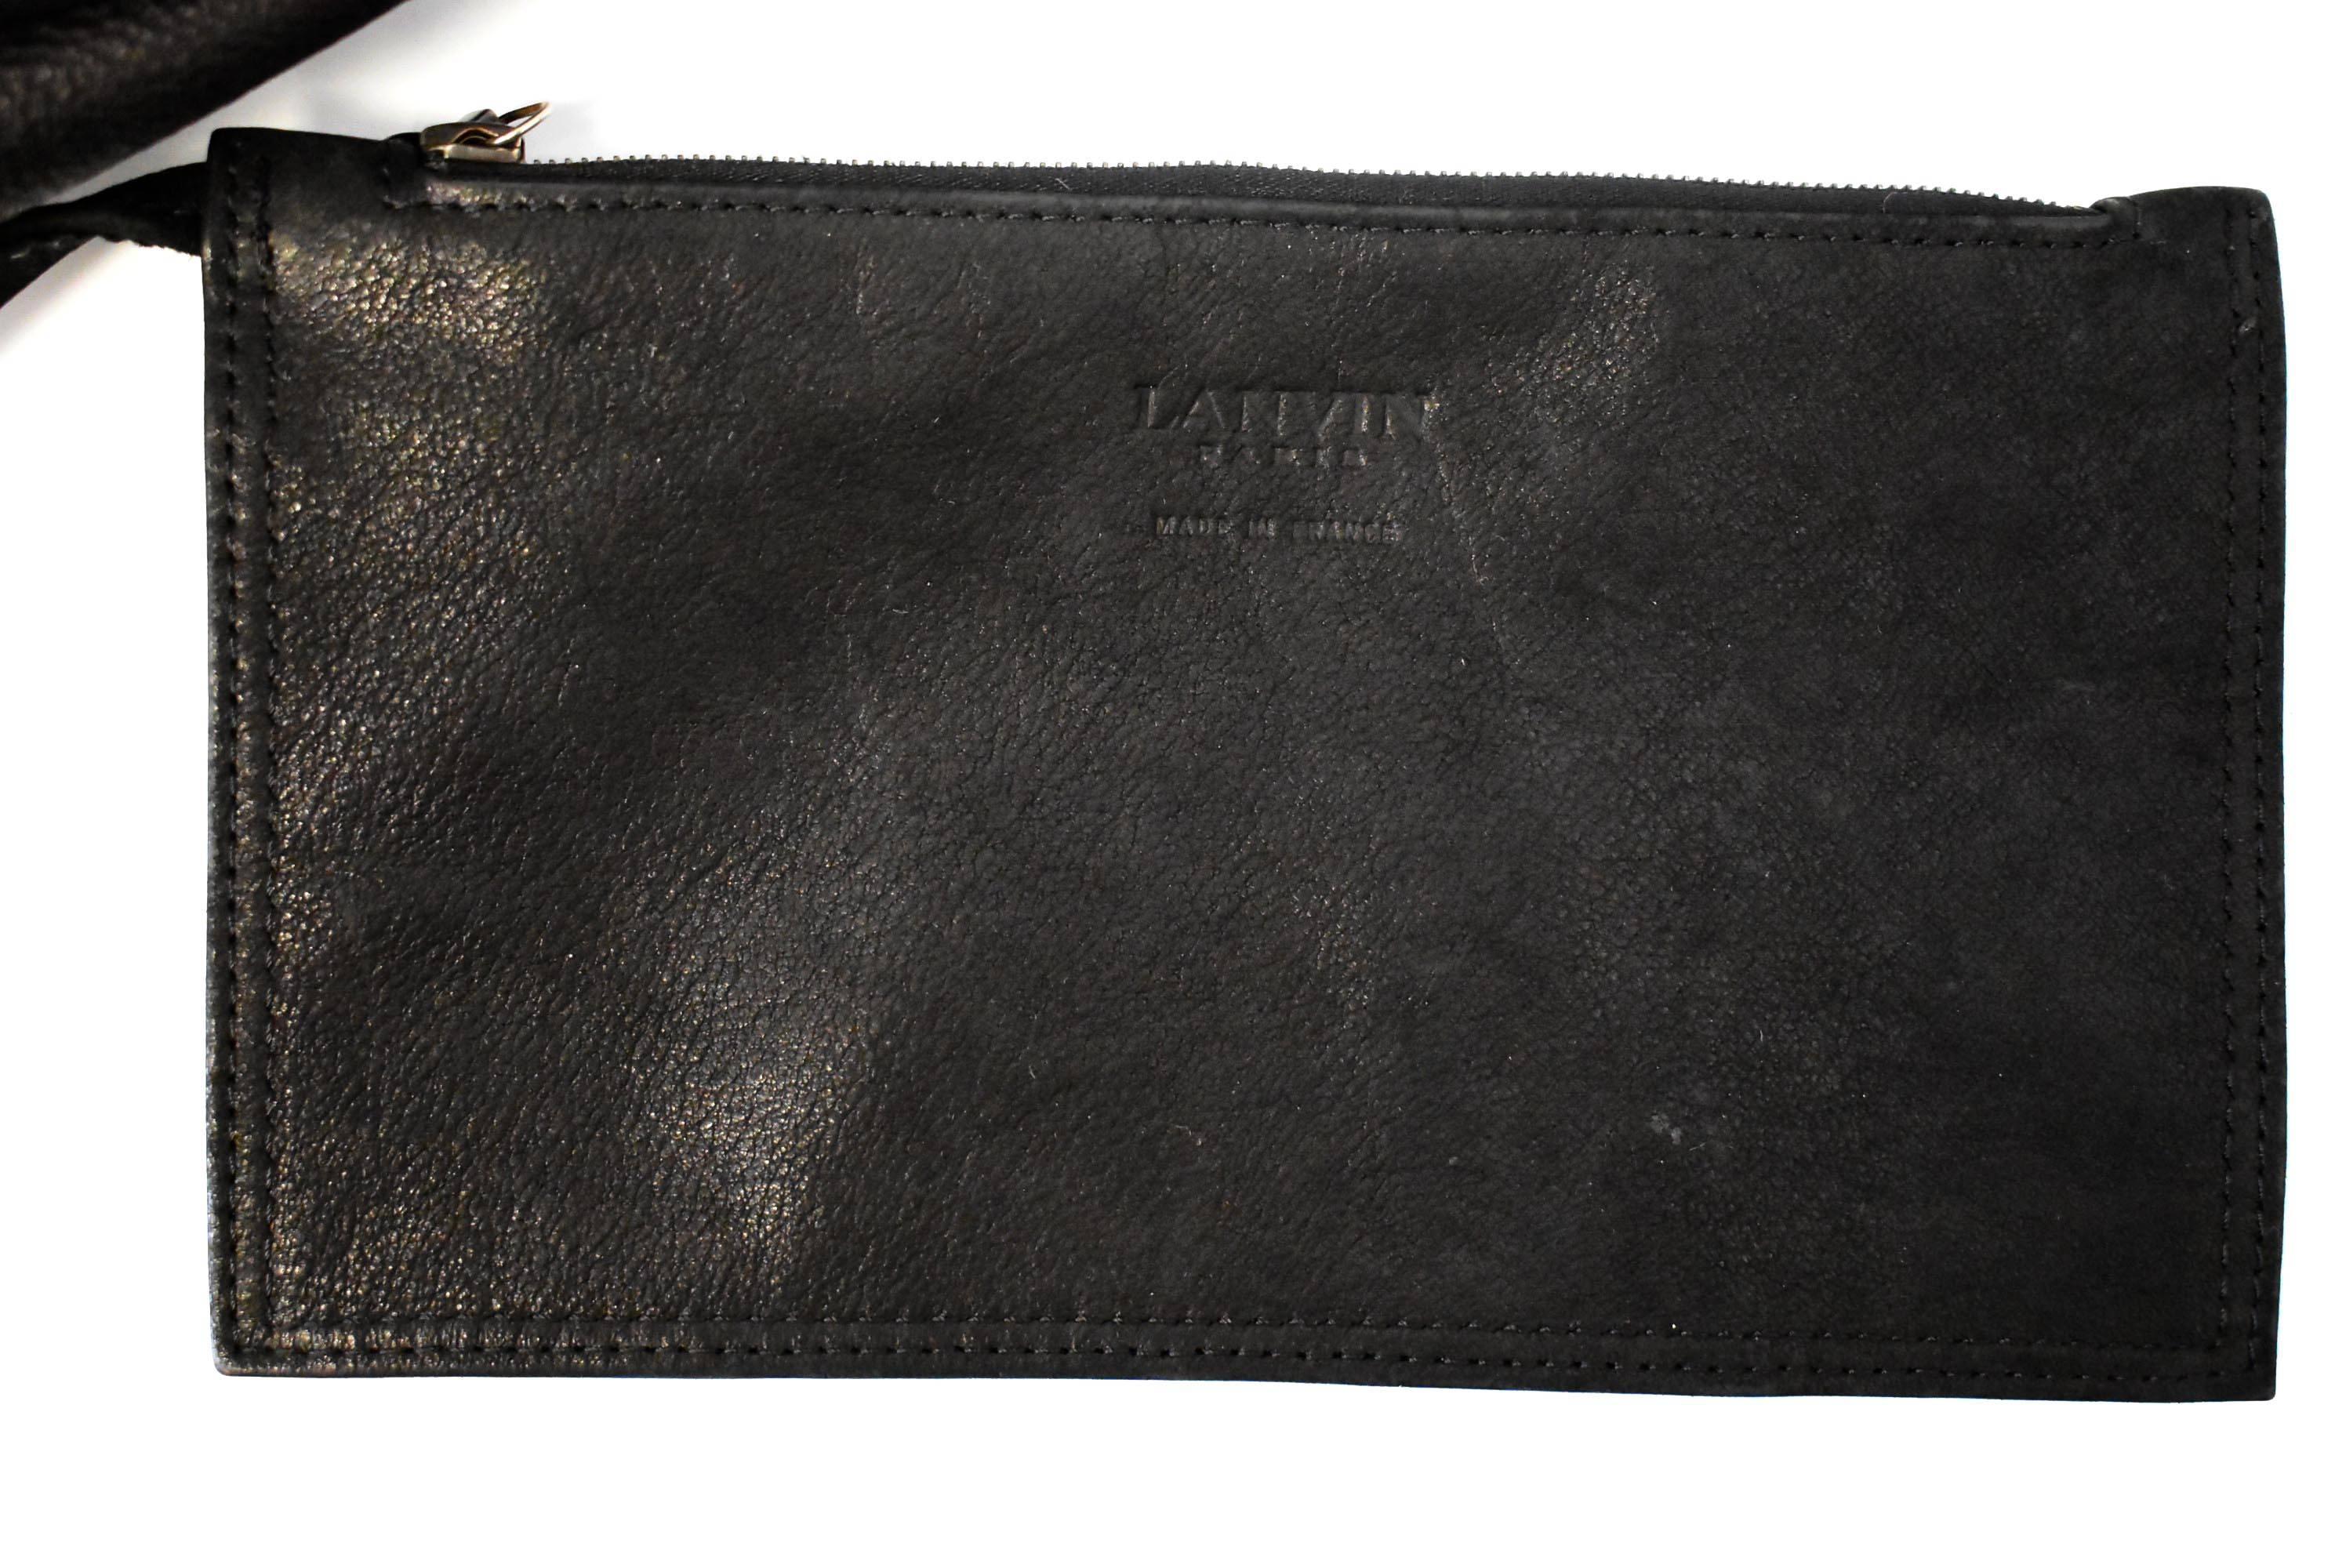 Lanvin Black Leather Oversize Tote Handbag  1